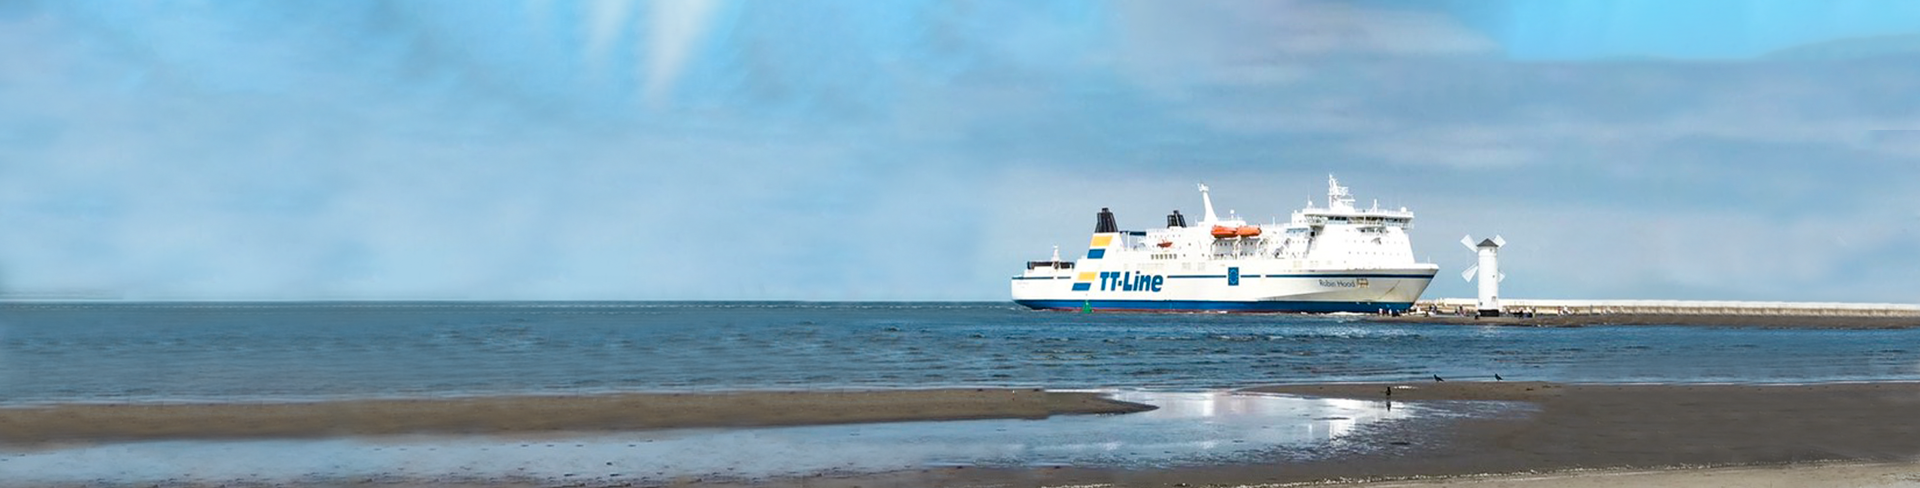 Dienstregeling-Świnoujście-Trelleborg-TT-Line-veerboot-Robin-Hood-vuurtoren